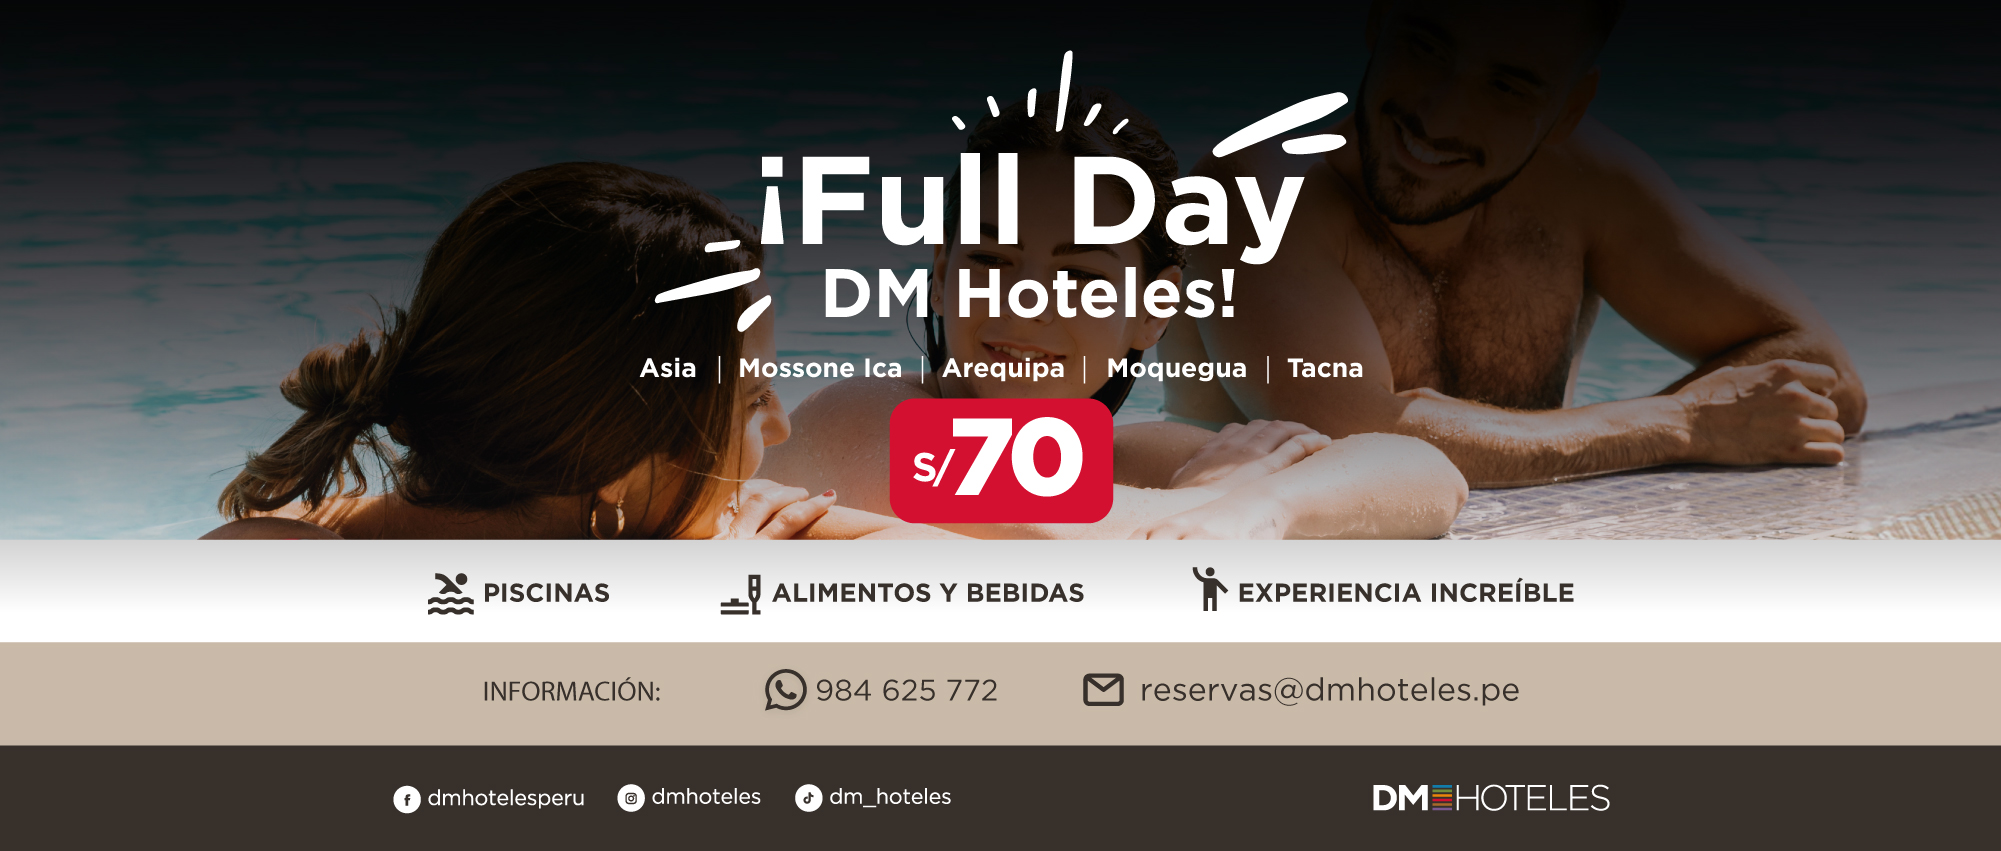 dm-hoteles-full-day-promocion-banner-web